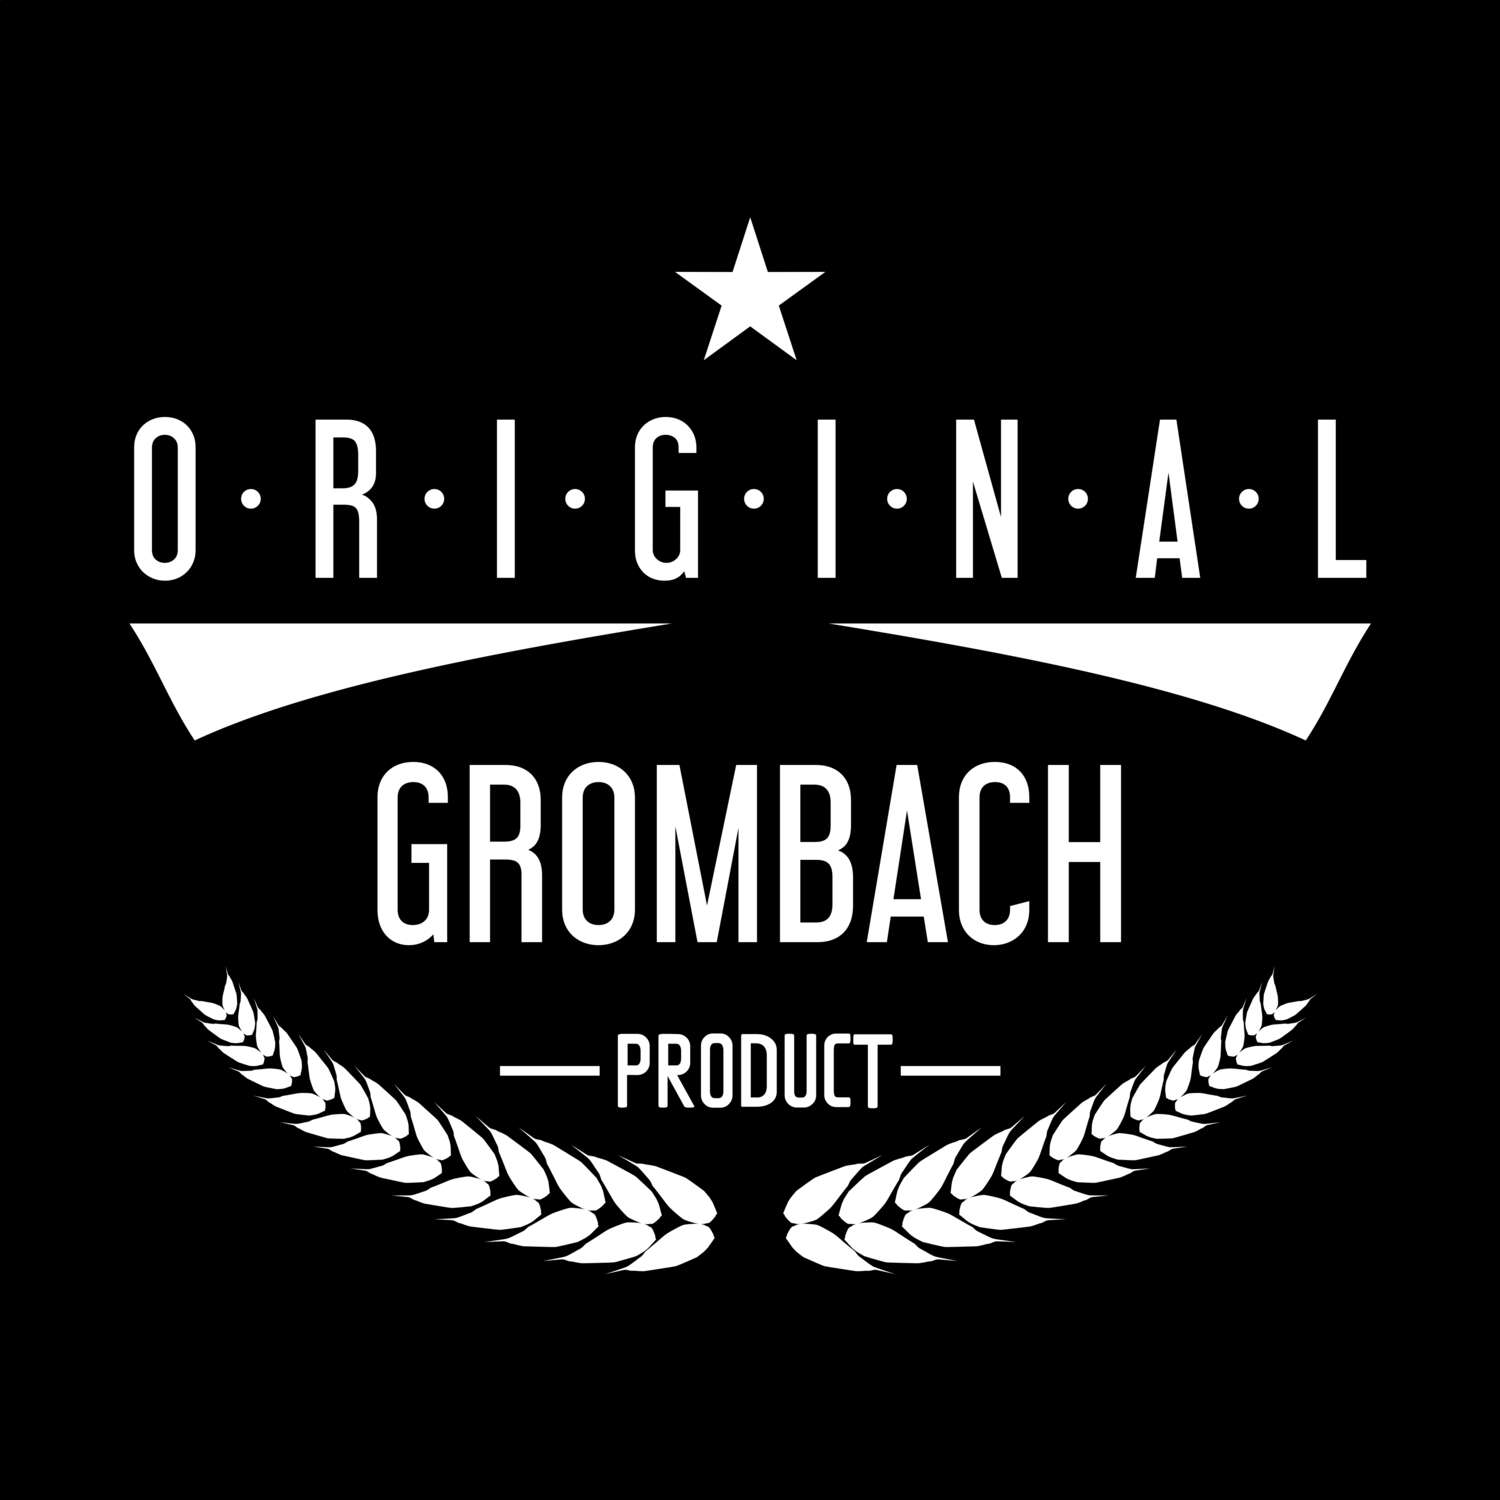 Grombach T-Shirt »Original Product«